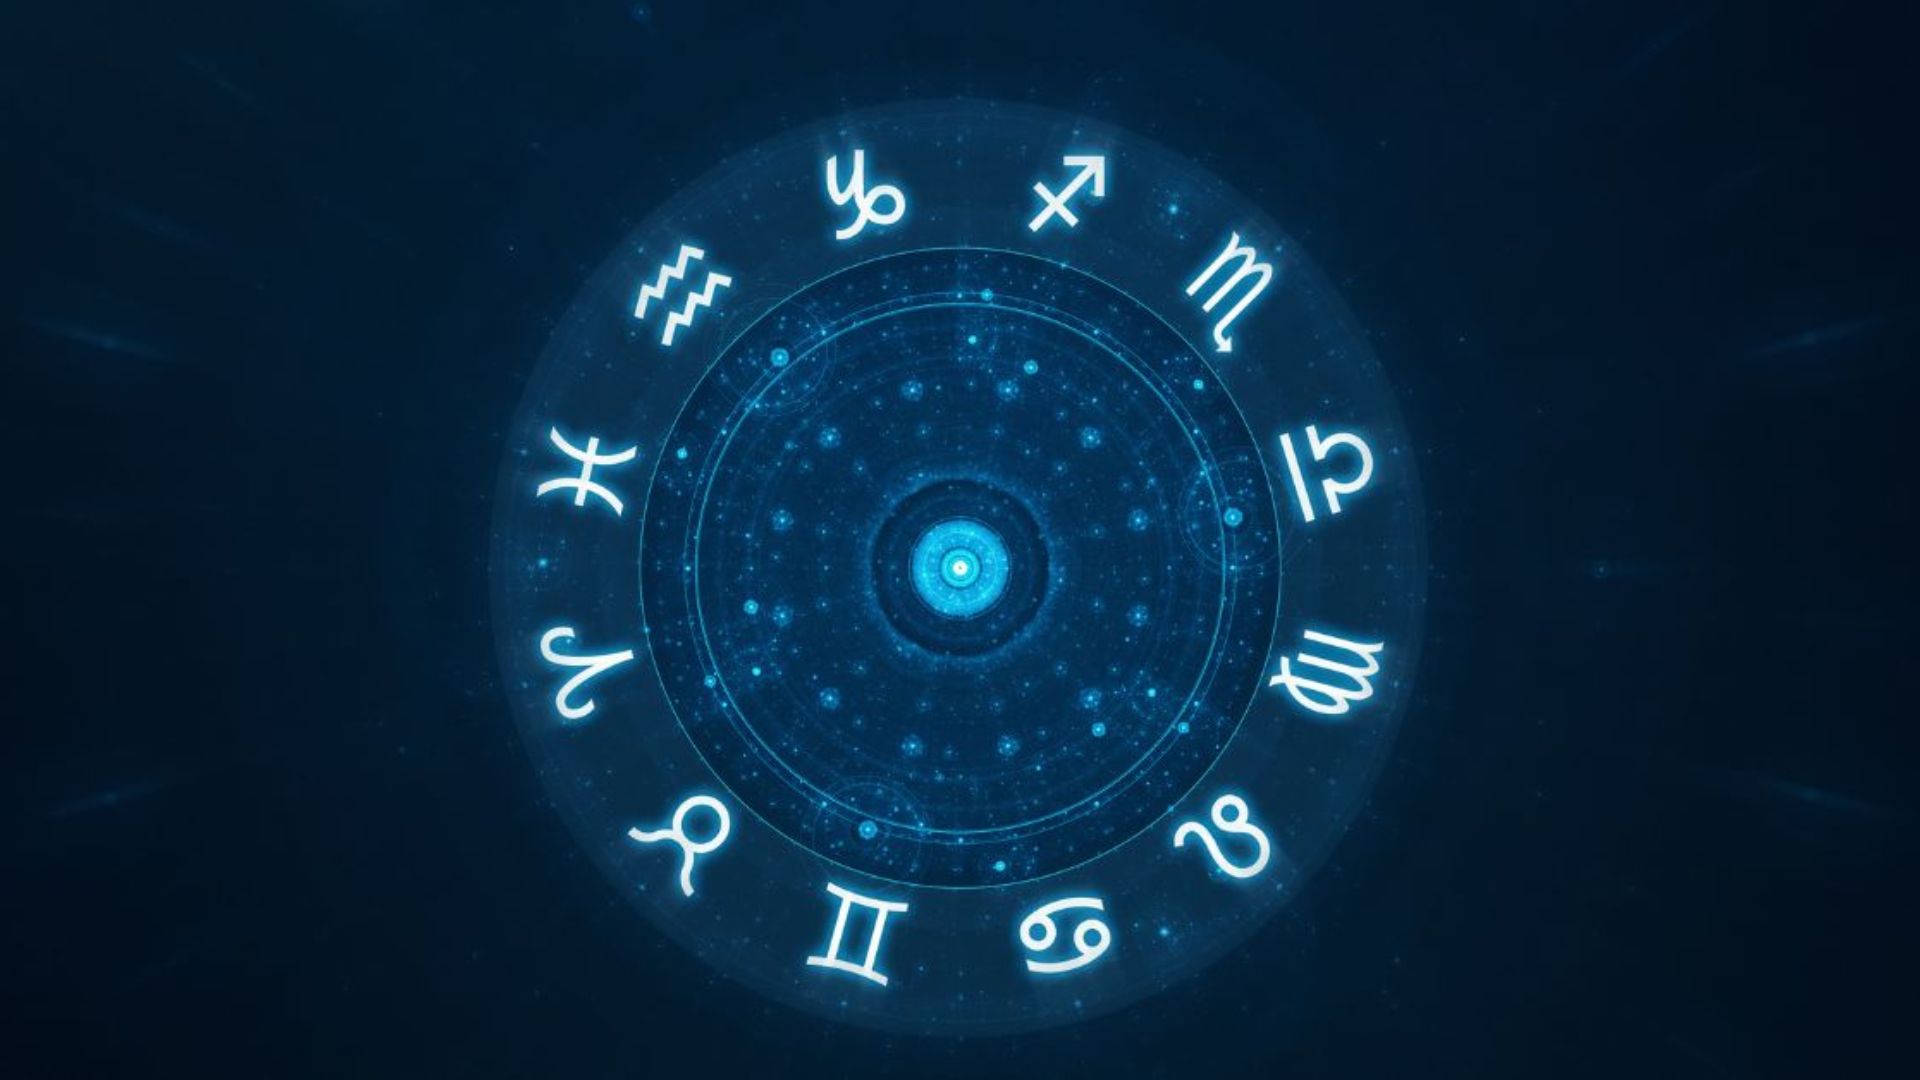 Glowing Zodiac Signs